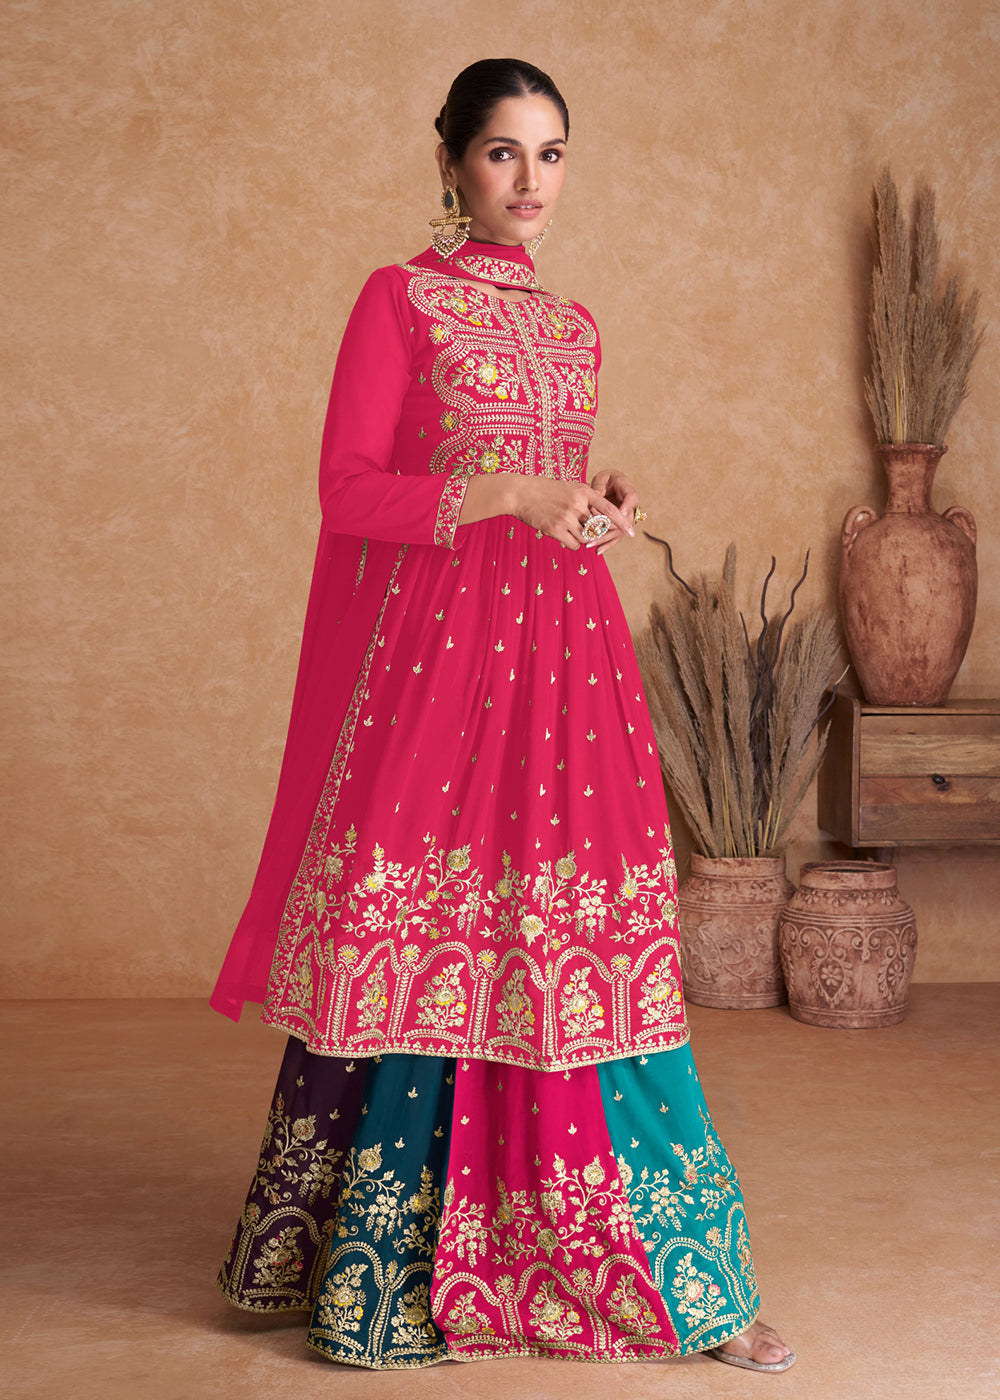 Attractive Wedding Jumpsuit Indian Festival Dress Women's Wear